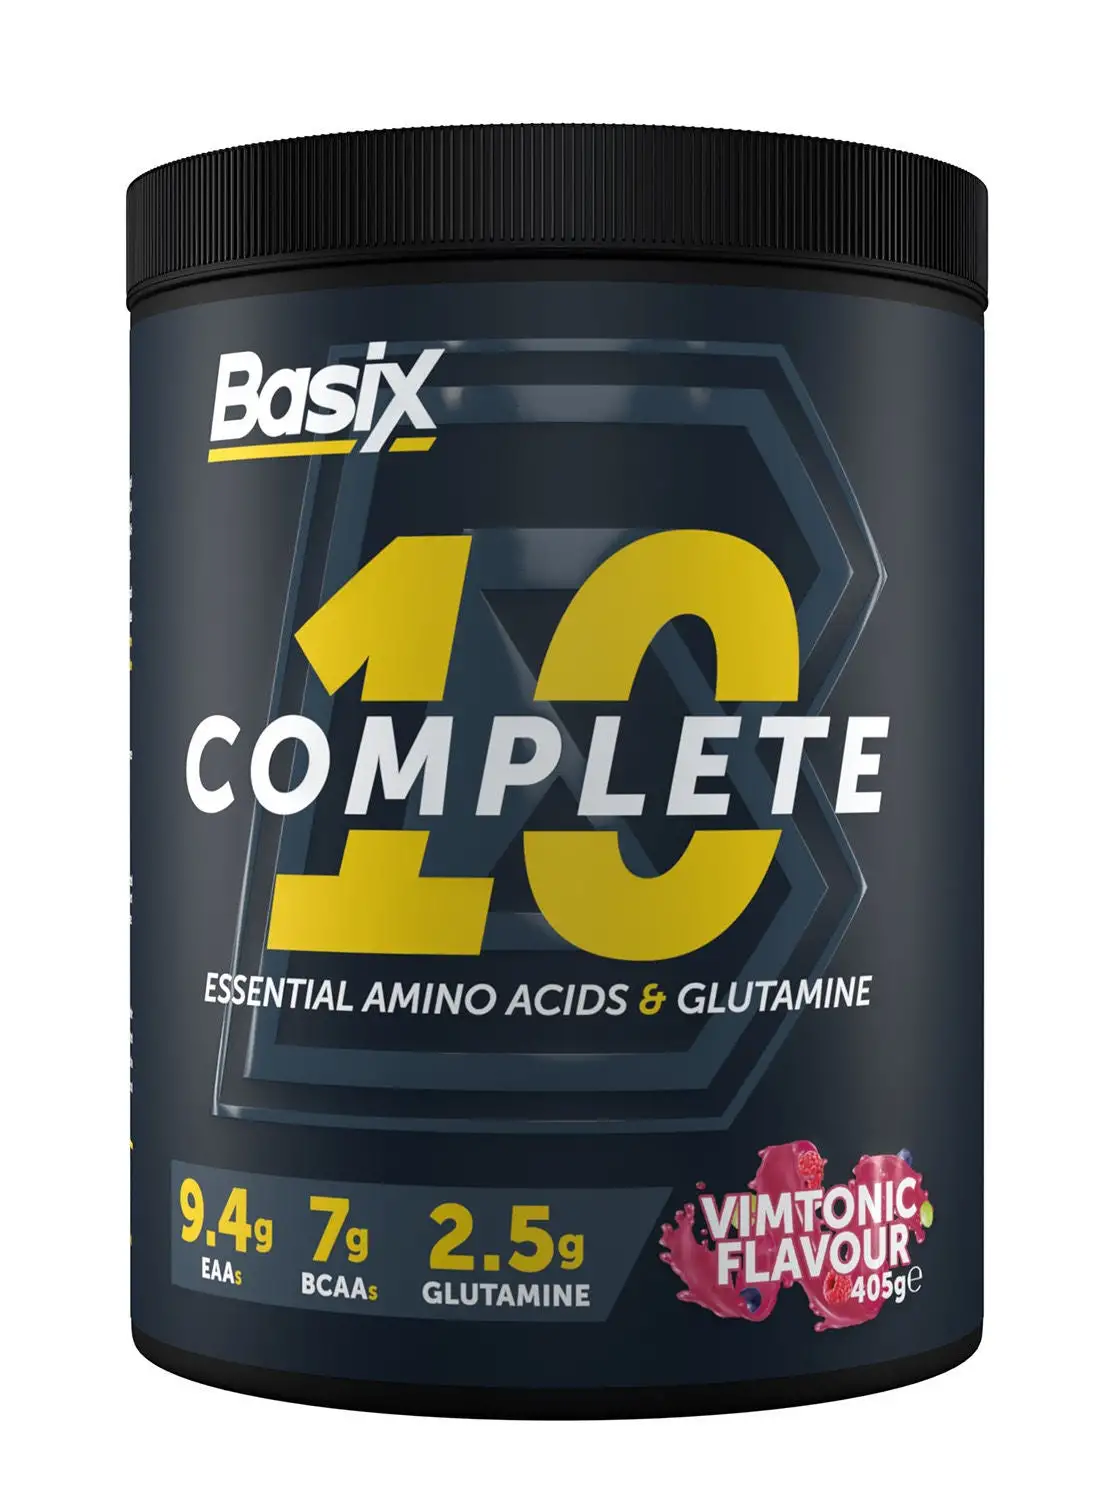 Basix Complete 10 30 Servings Vimtonic 405 G